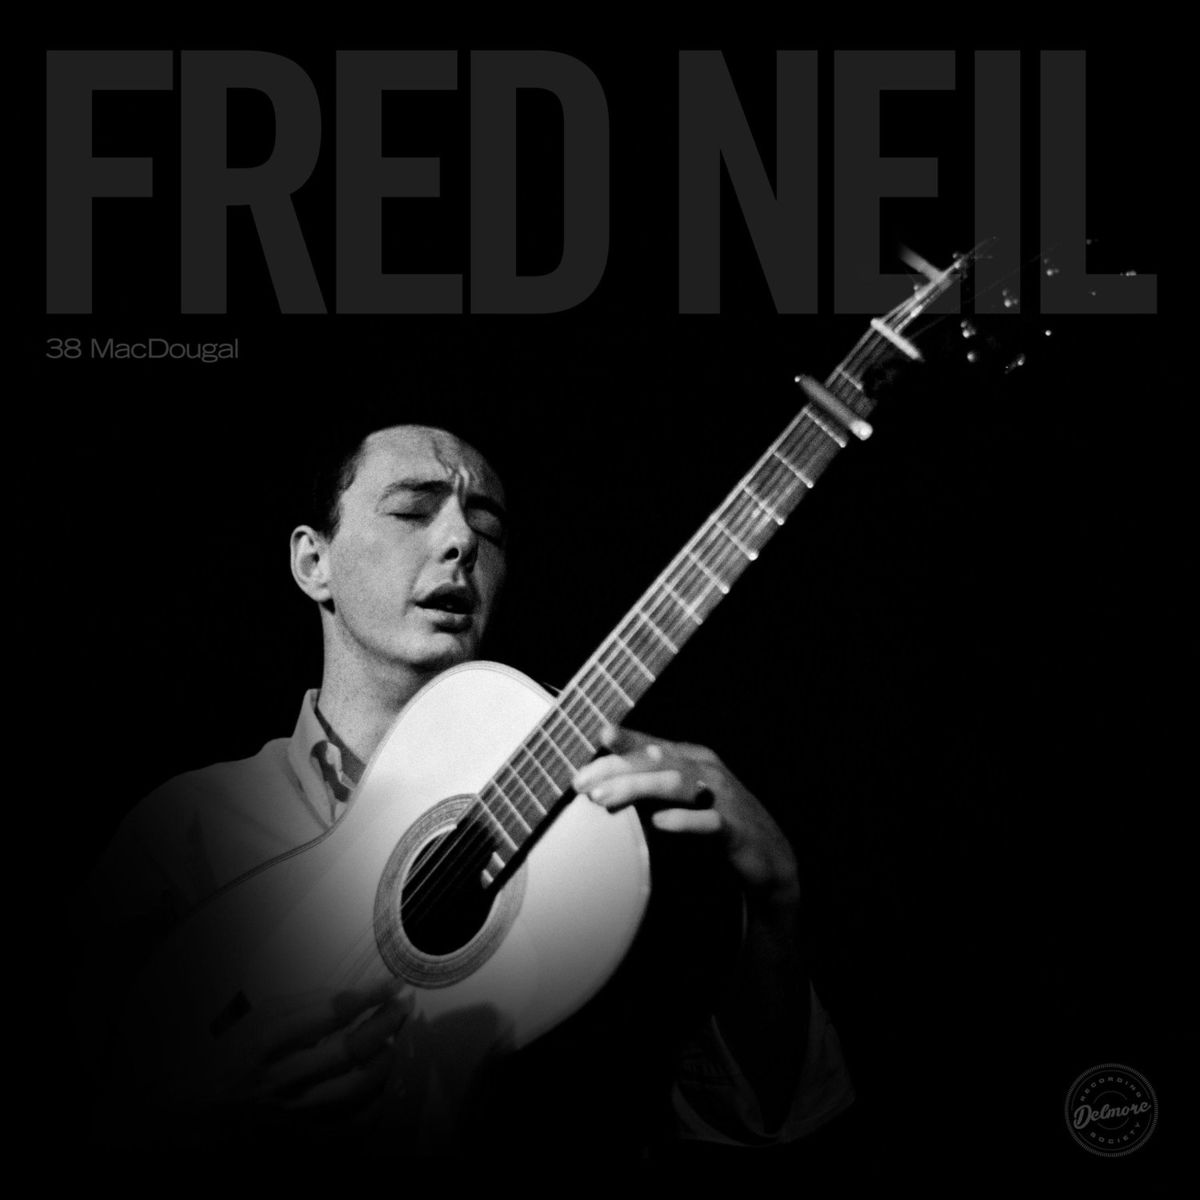 Fred Neil – 2021 – 2 Ma cDougal